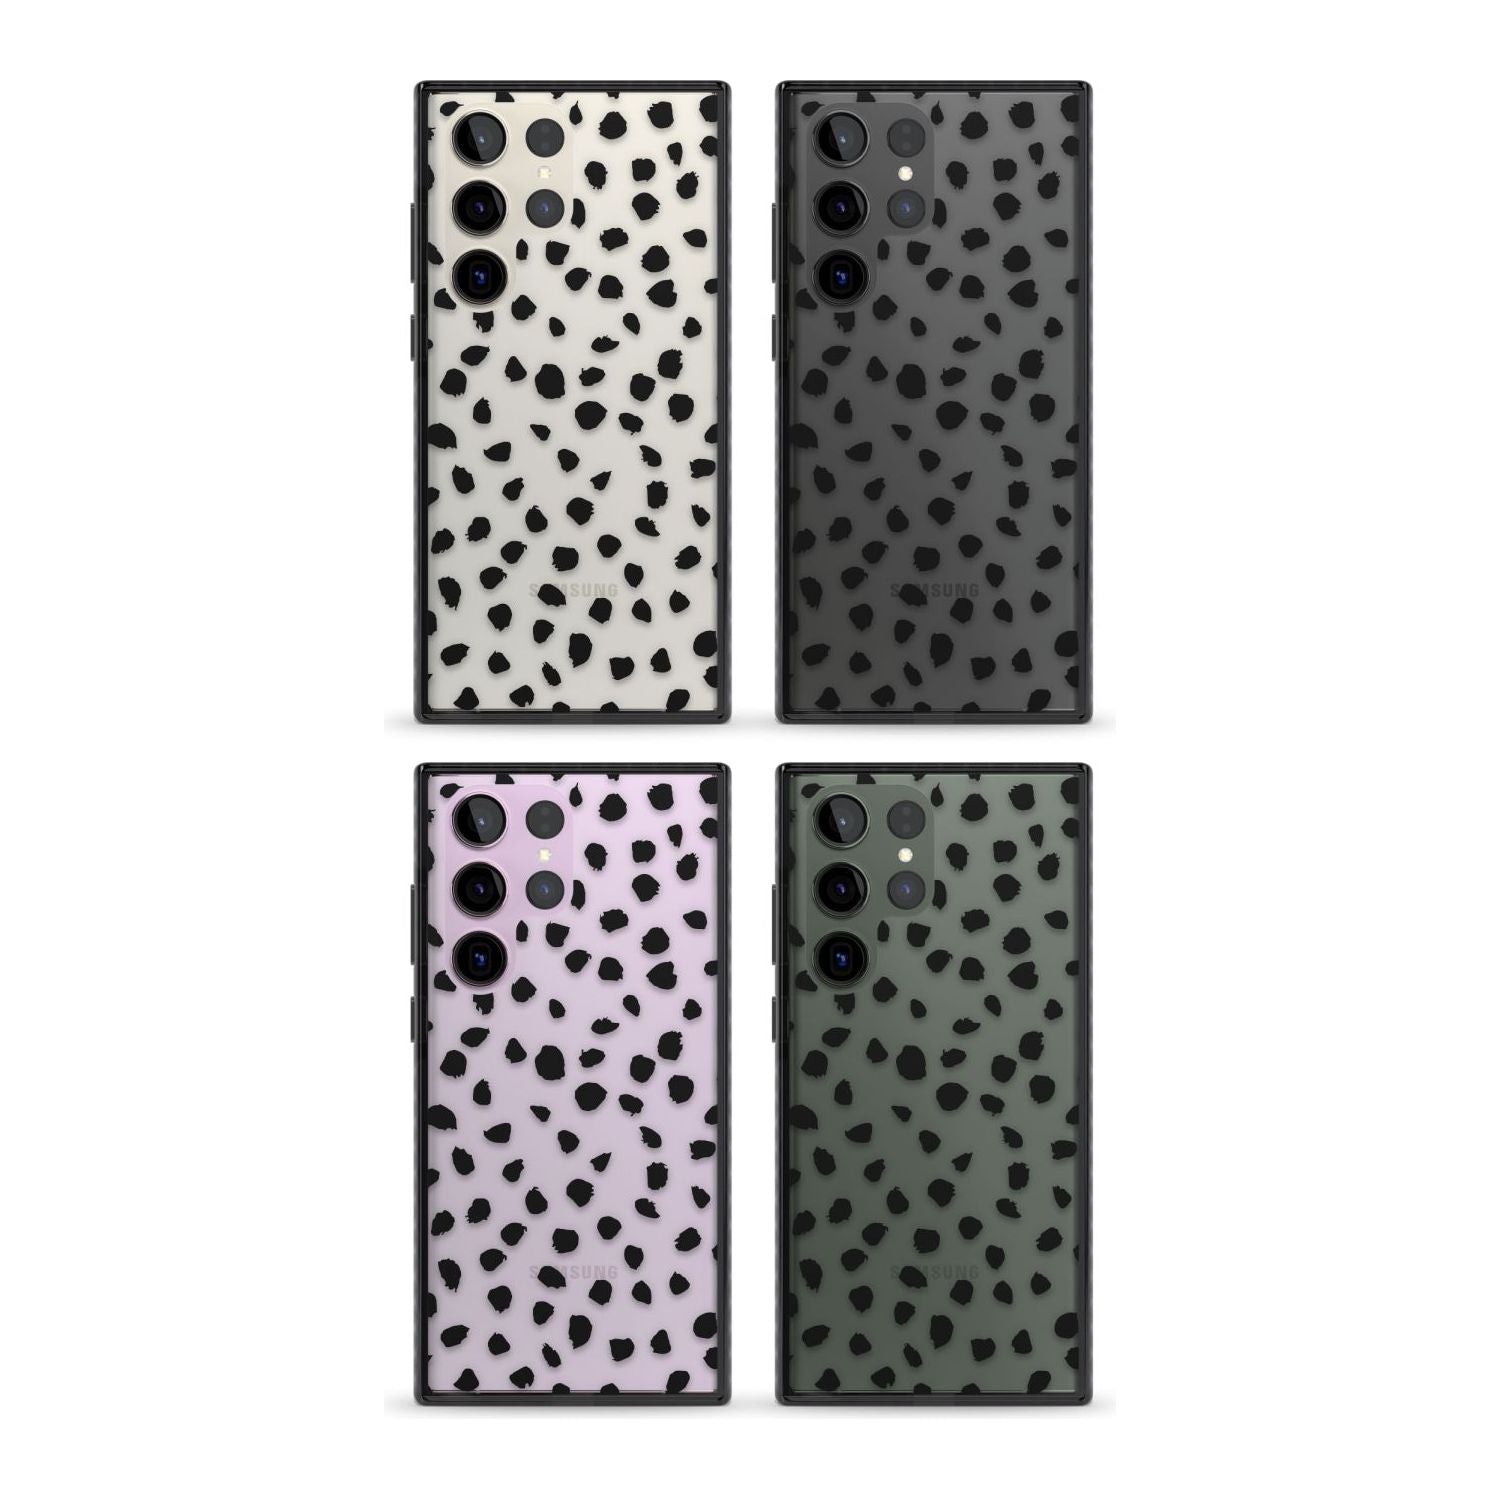 Black on Transparent Dalmatian Polka Dot Spots